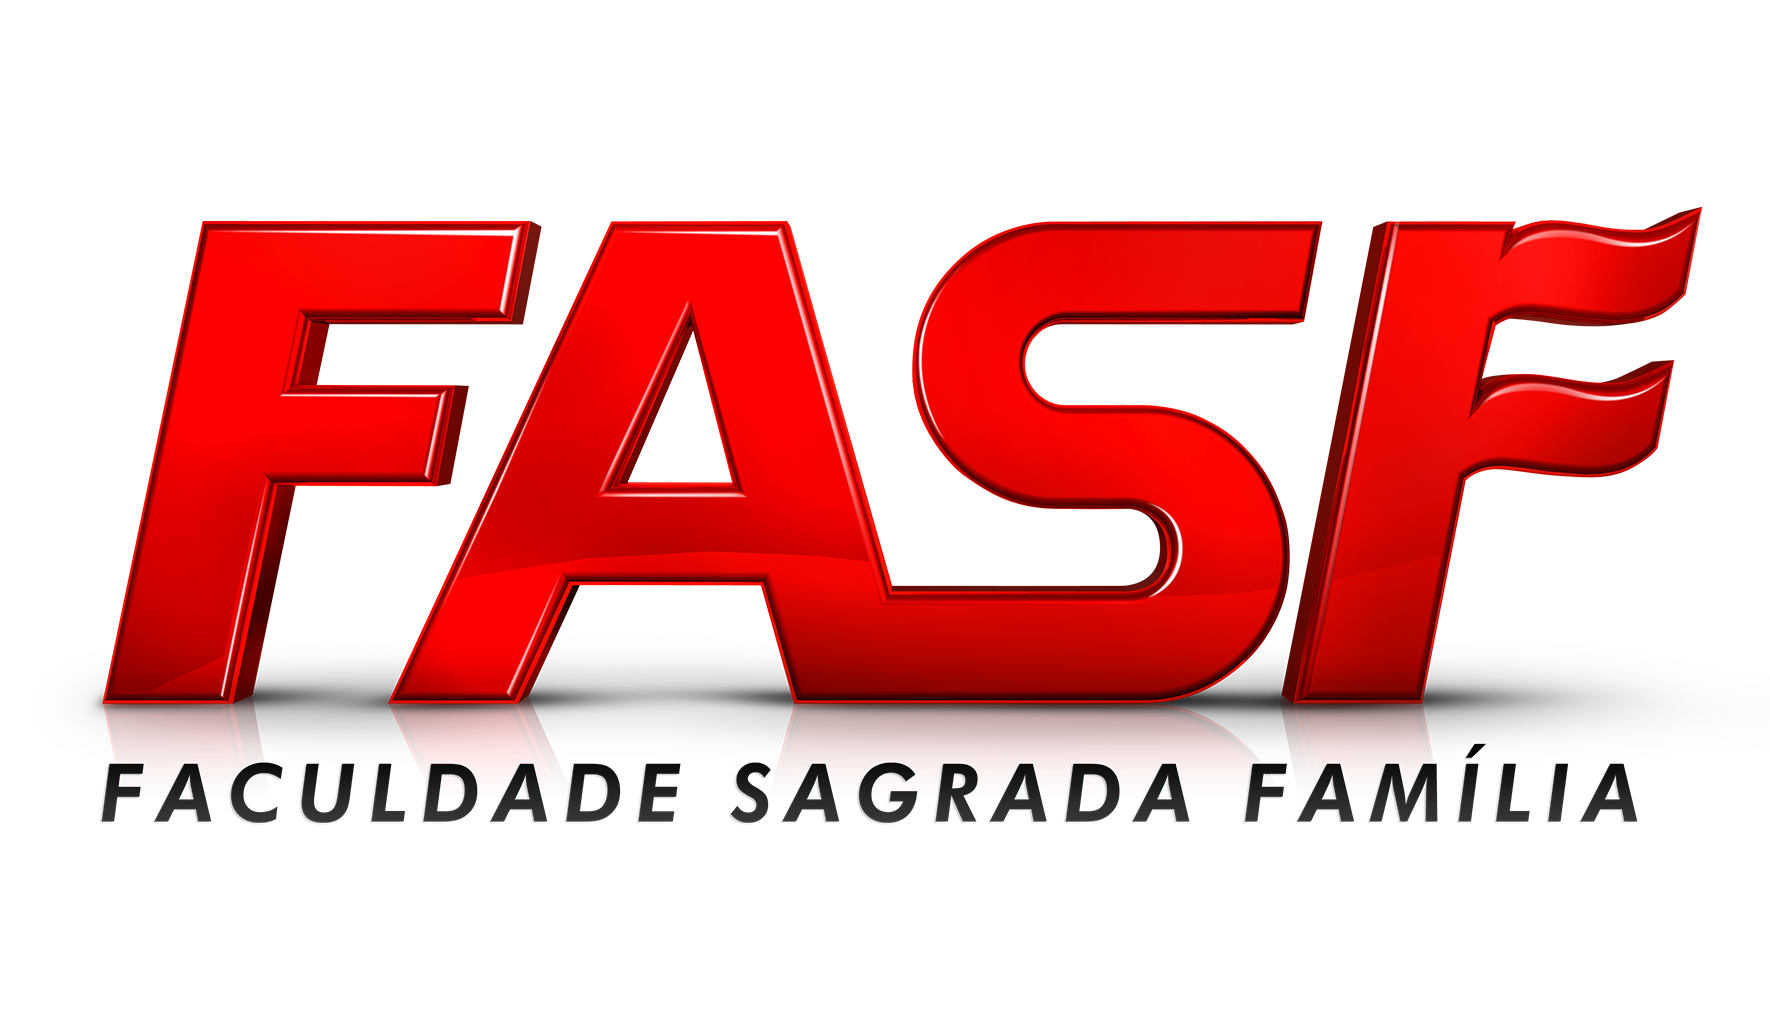 FASF - Faculdades Sagrada Família